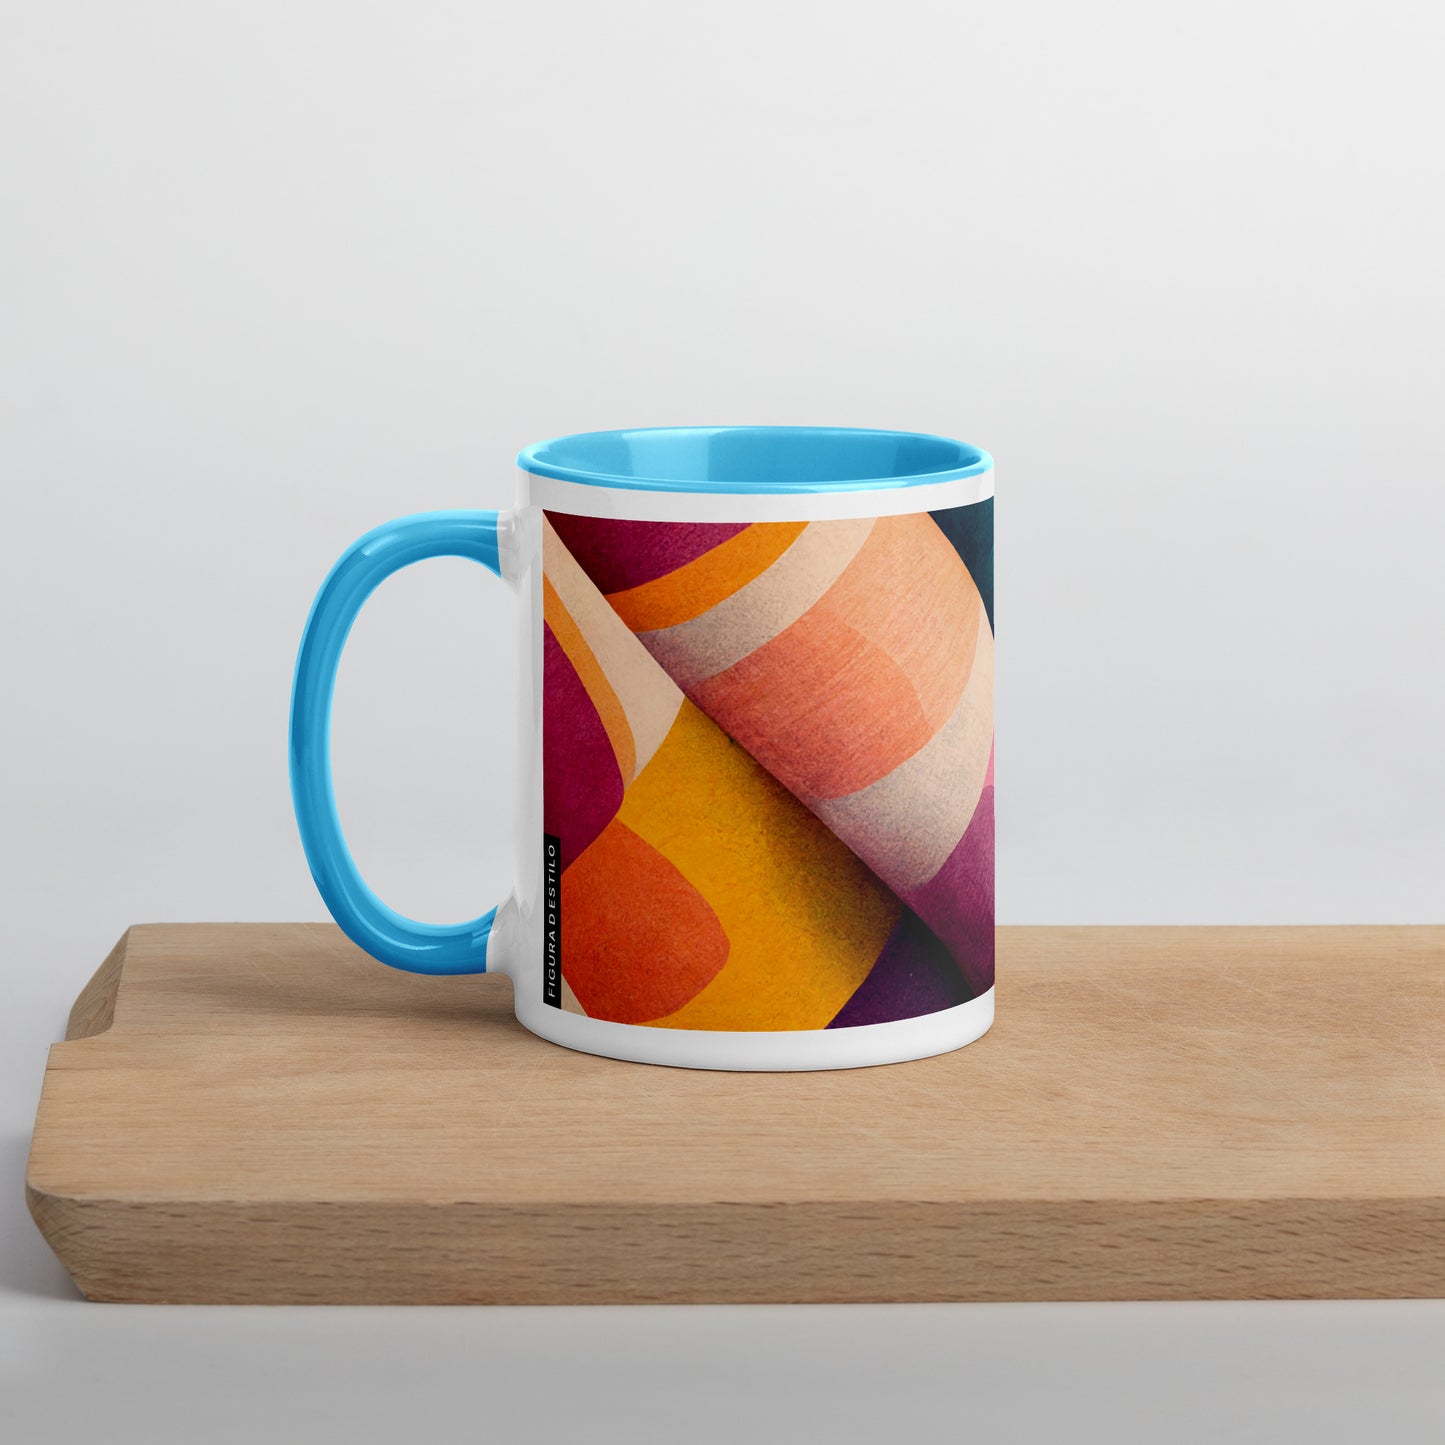 Colored Mesh Ceramic Mug with Color Inside